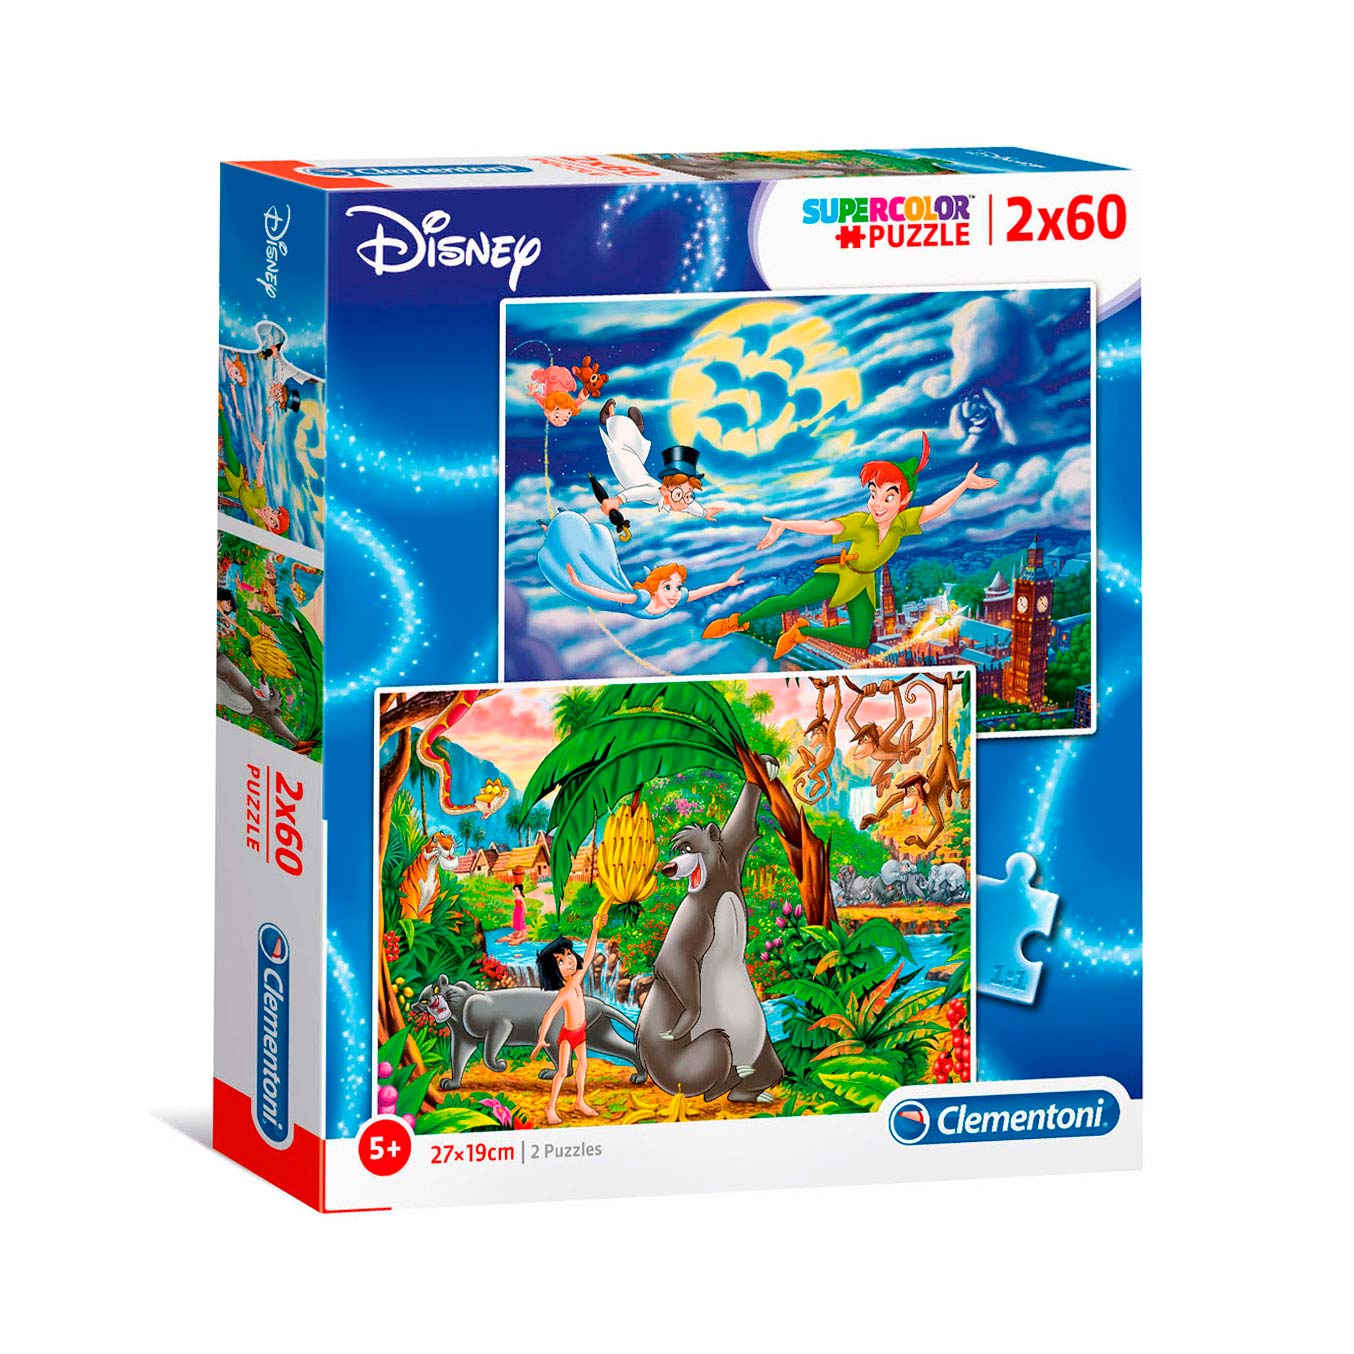 Peter Pan + Jungle Book Puzzle 2X60